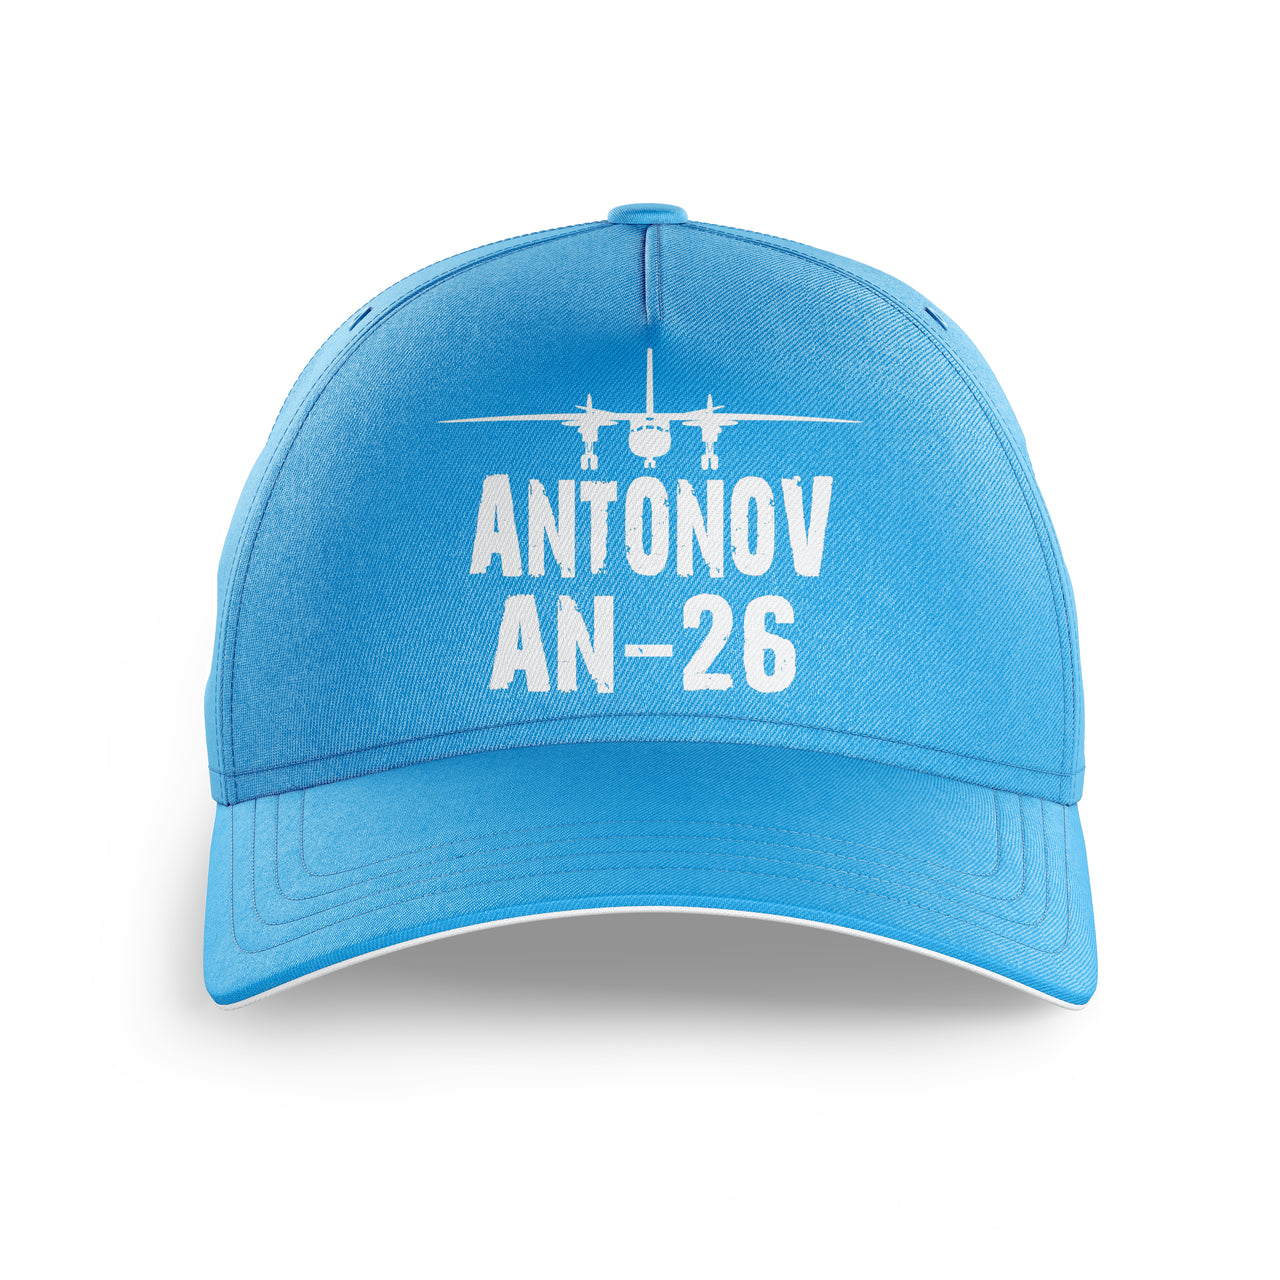 Antonov AN-26 & Plane Printed Hats